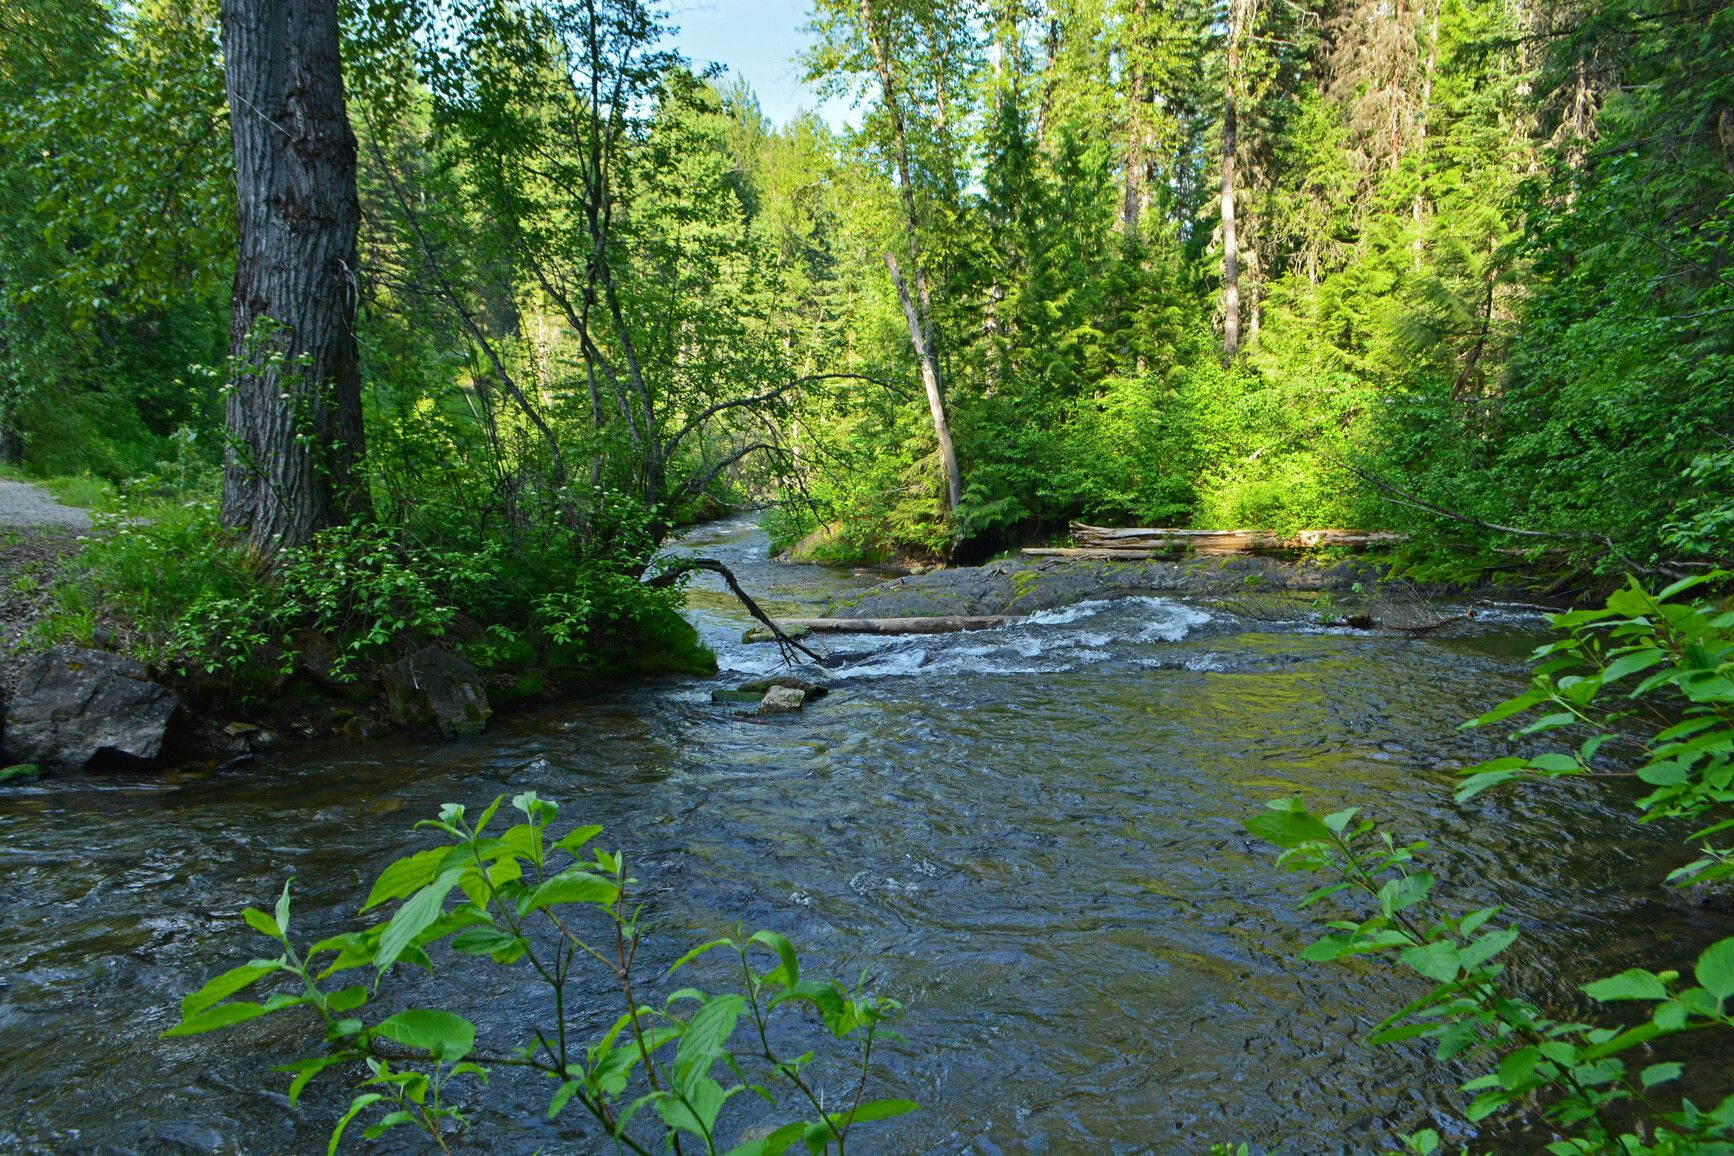 Lizard Creek meandering through Mount Fernie Park's dense forest.